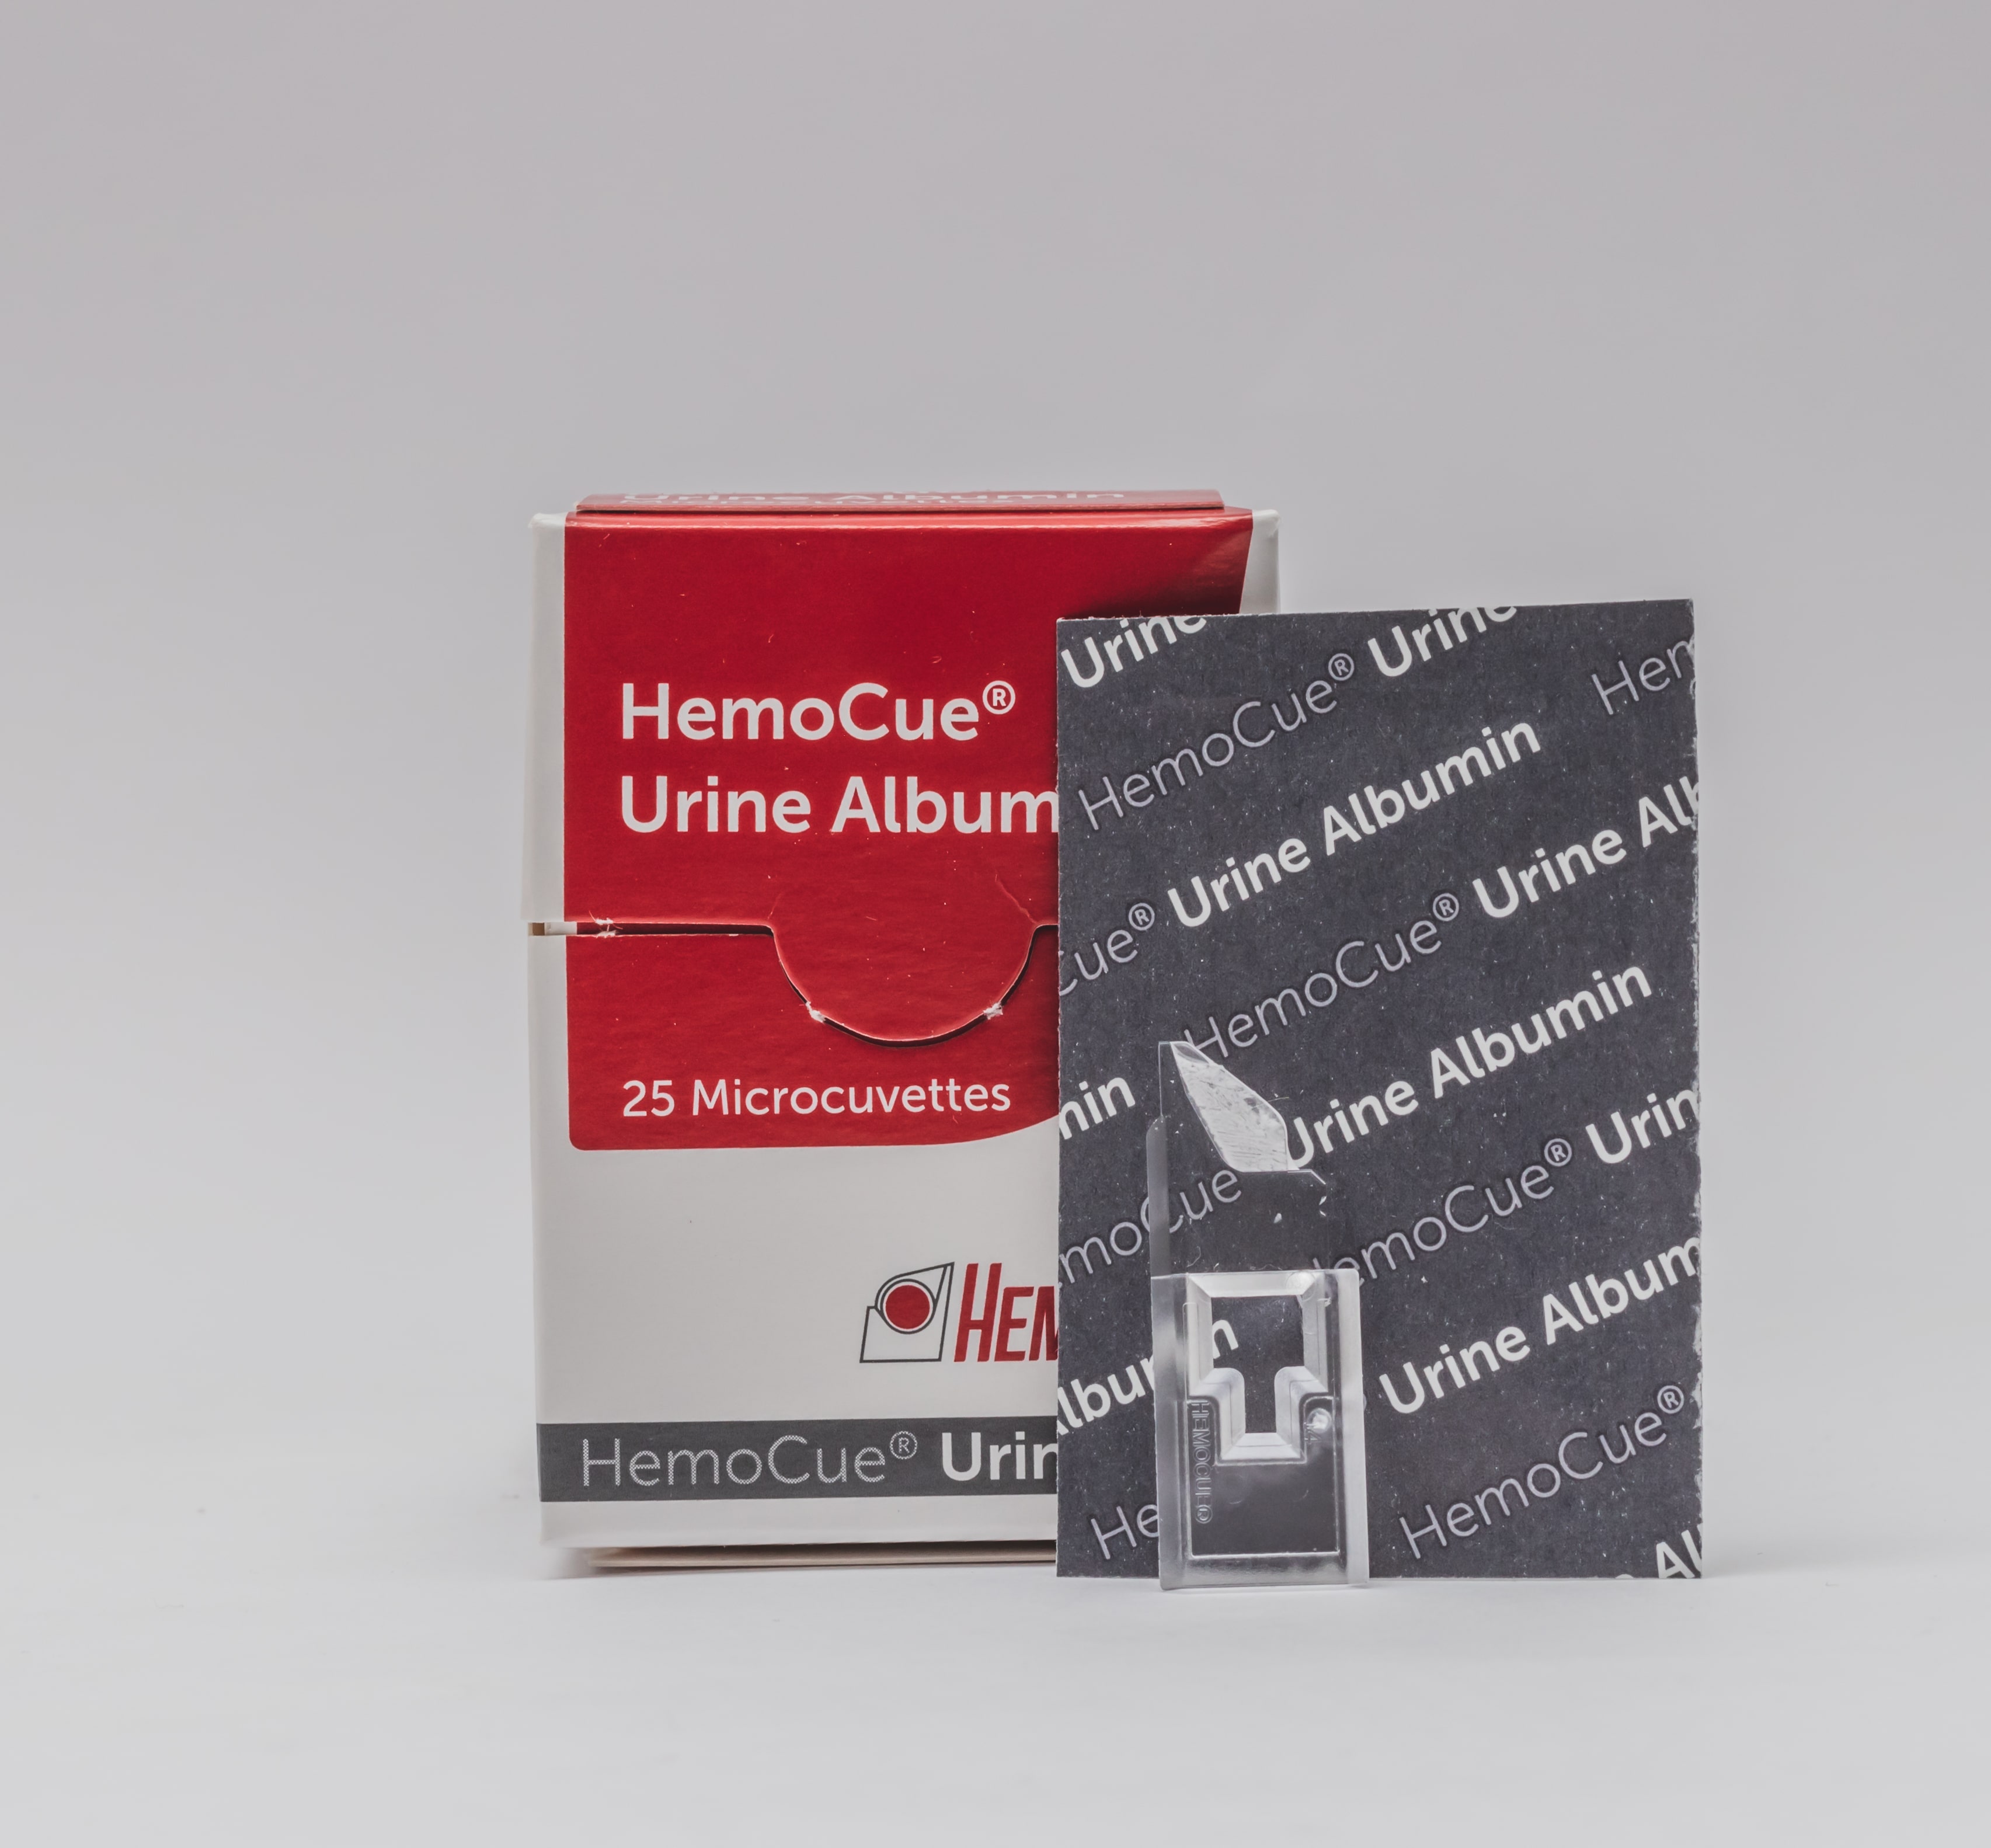 Microcubetas Albumin 201-HemoCue